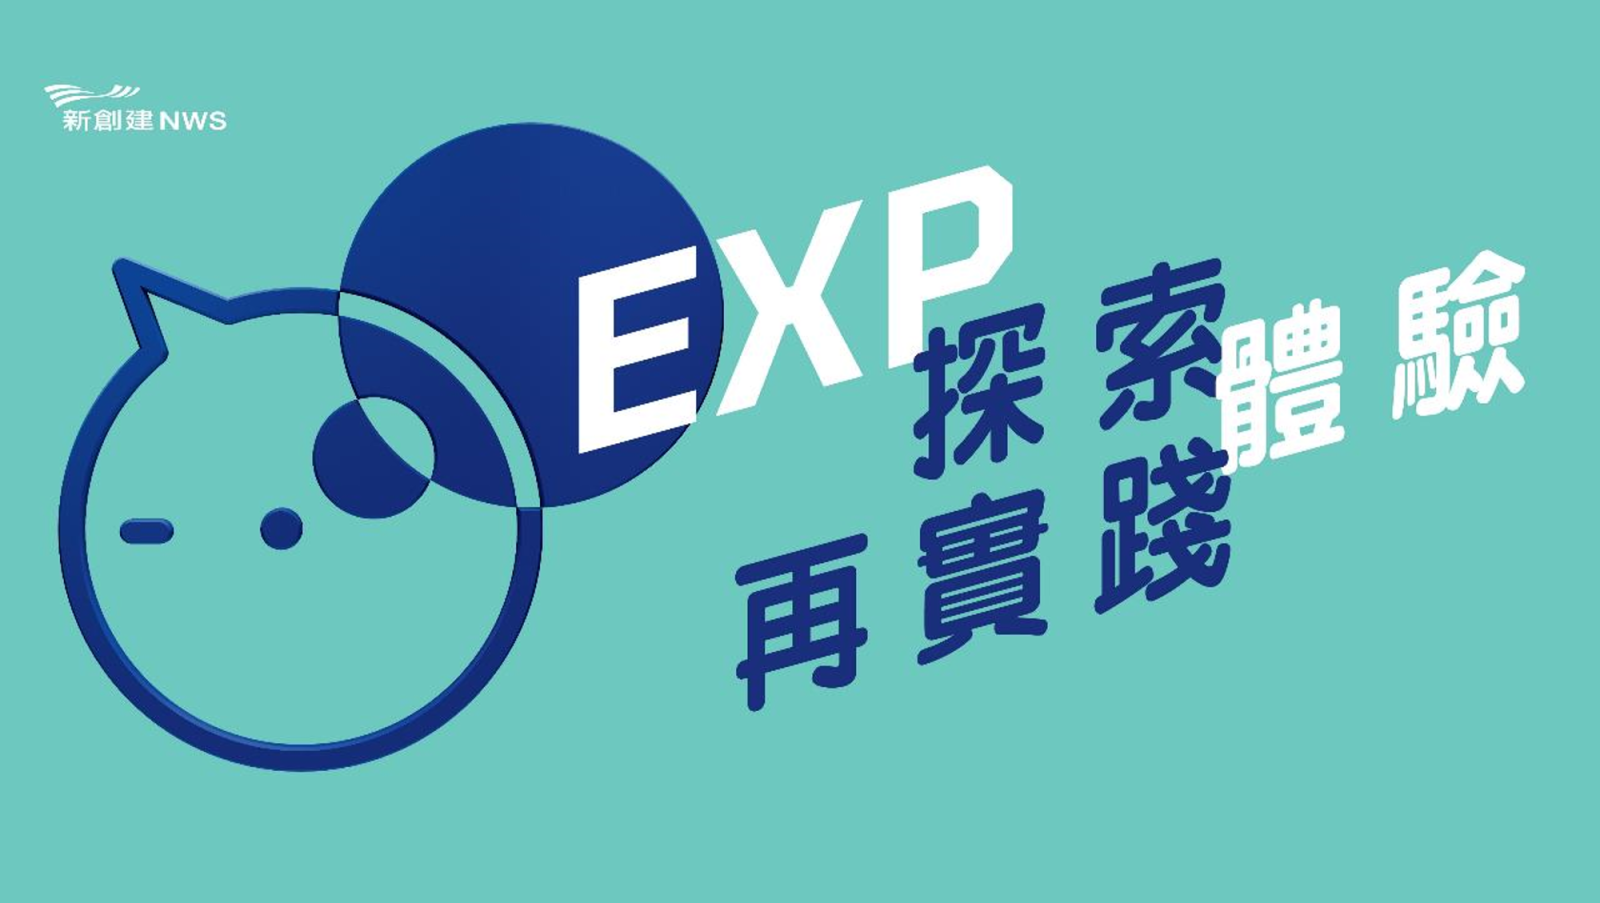 FTLife X NWS「EXP」Journey 2022